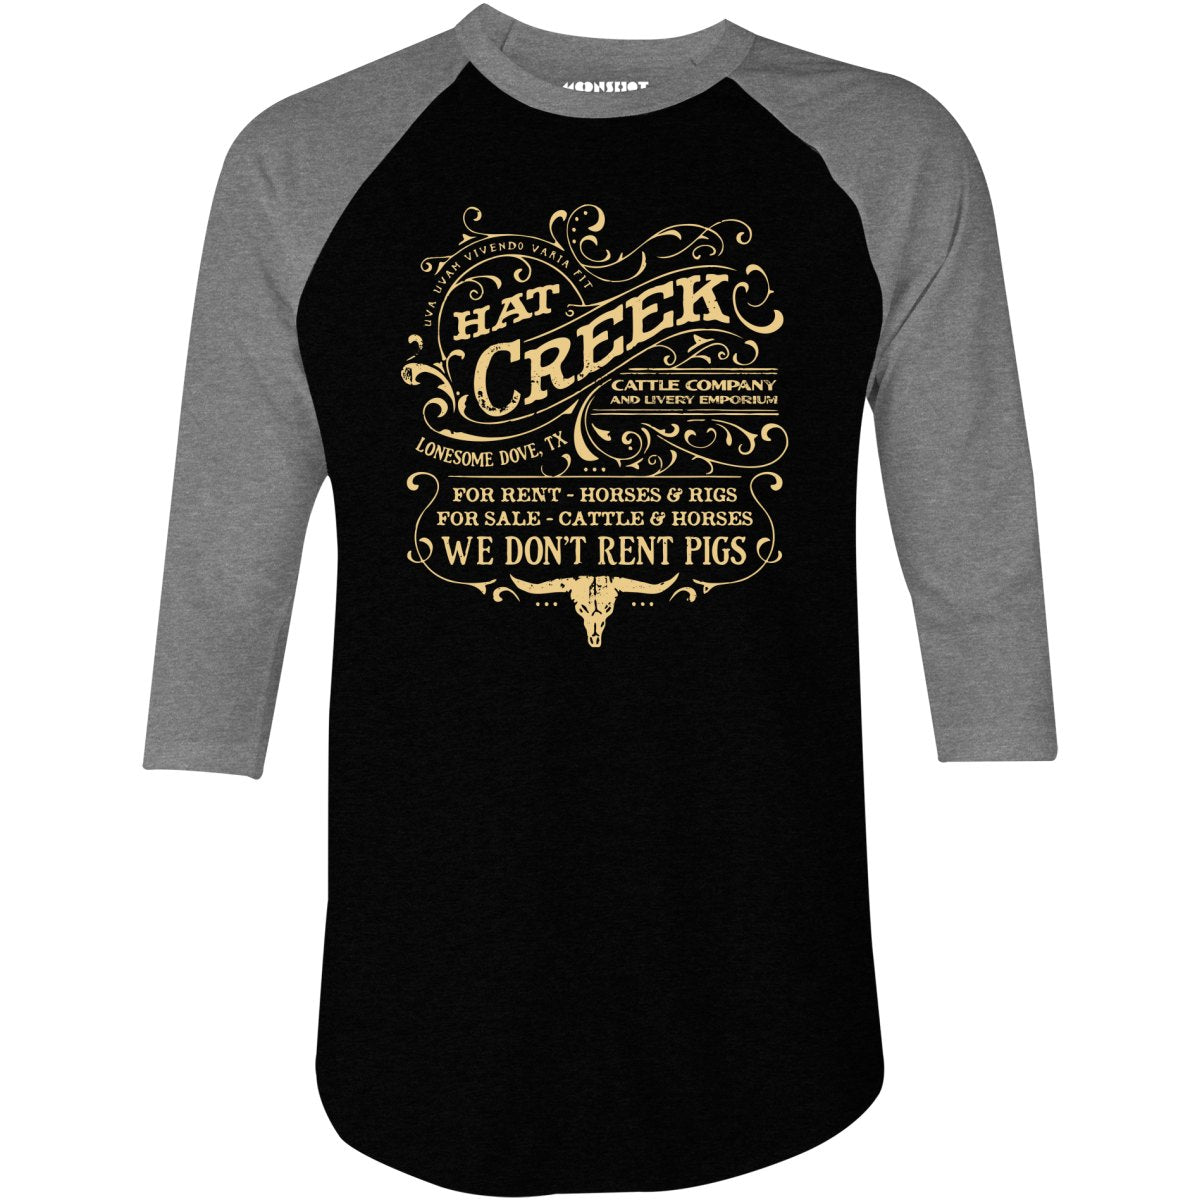 Hat Creek Cattle Company - Lonesome Dove, TX - 3/4 Sleeve Raglan T-Shirt